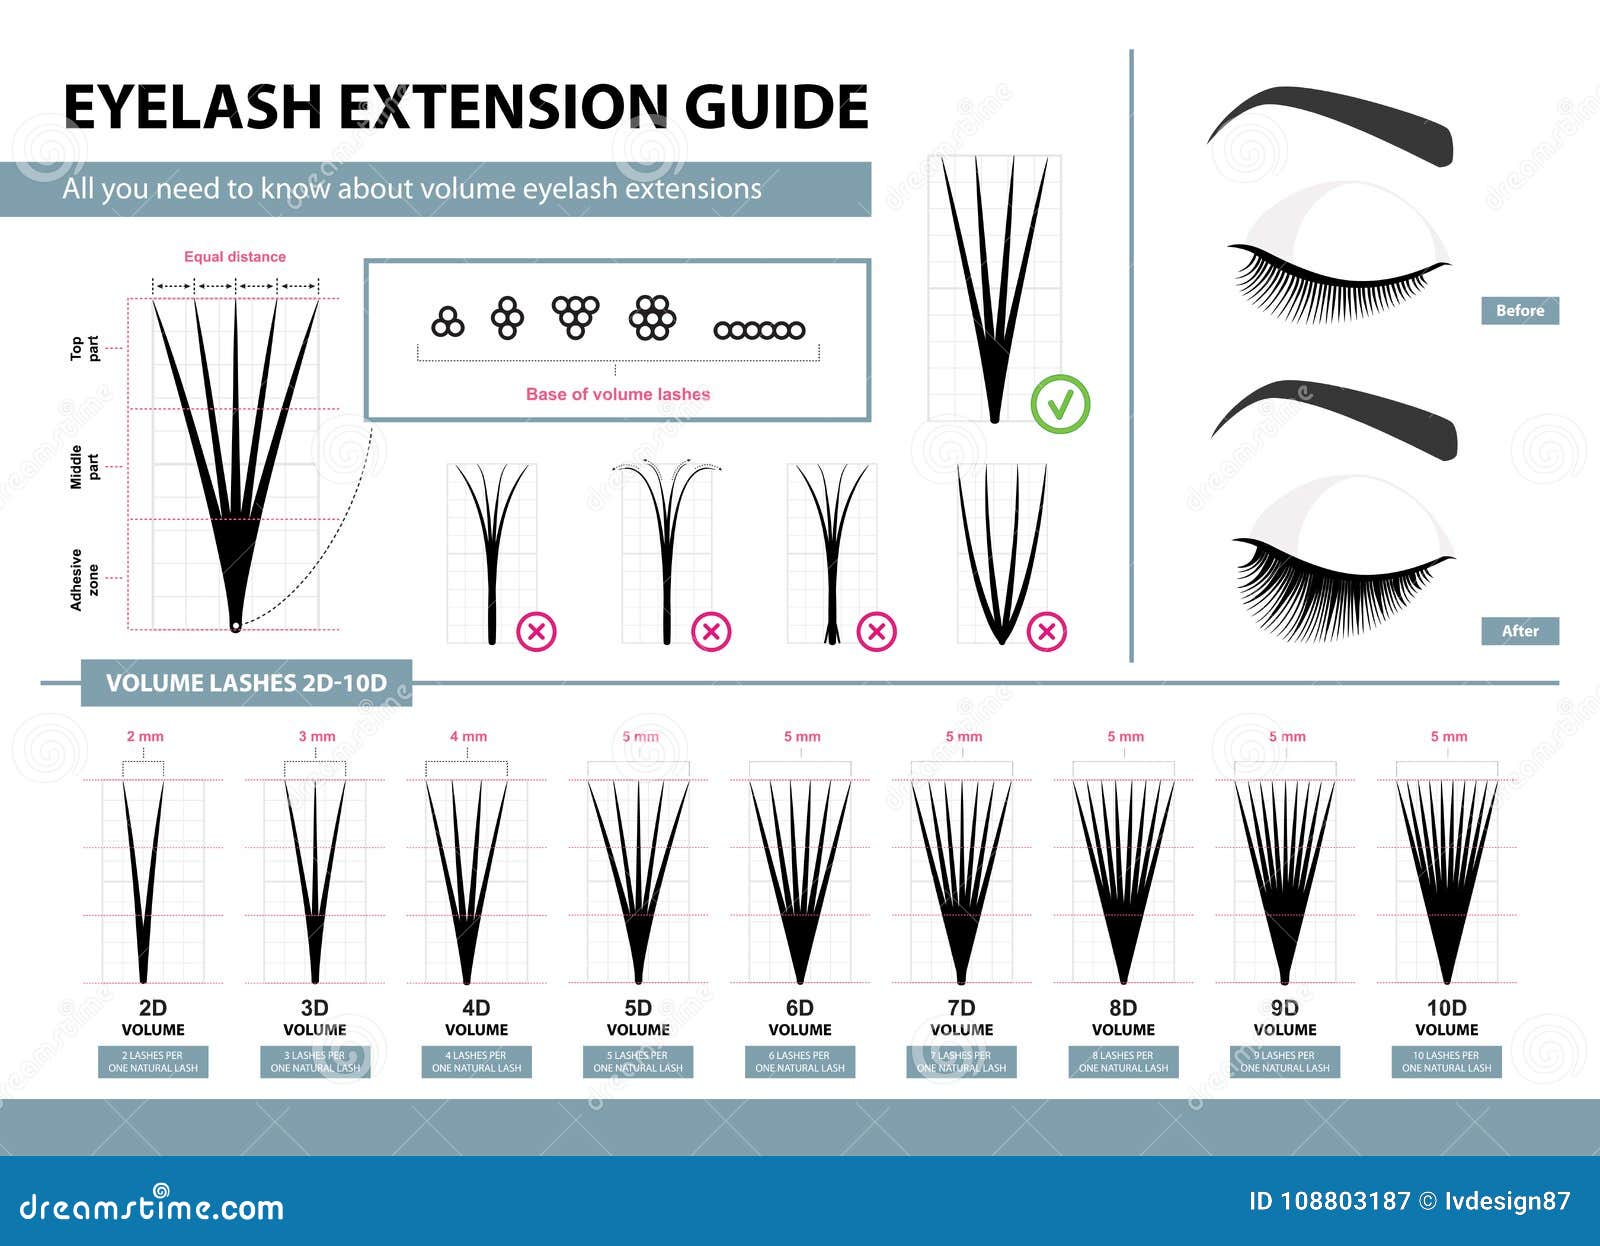 eyelash extension guide. volume eyelash extensions. 2d - 10d volume. tips and tricks. infographic  